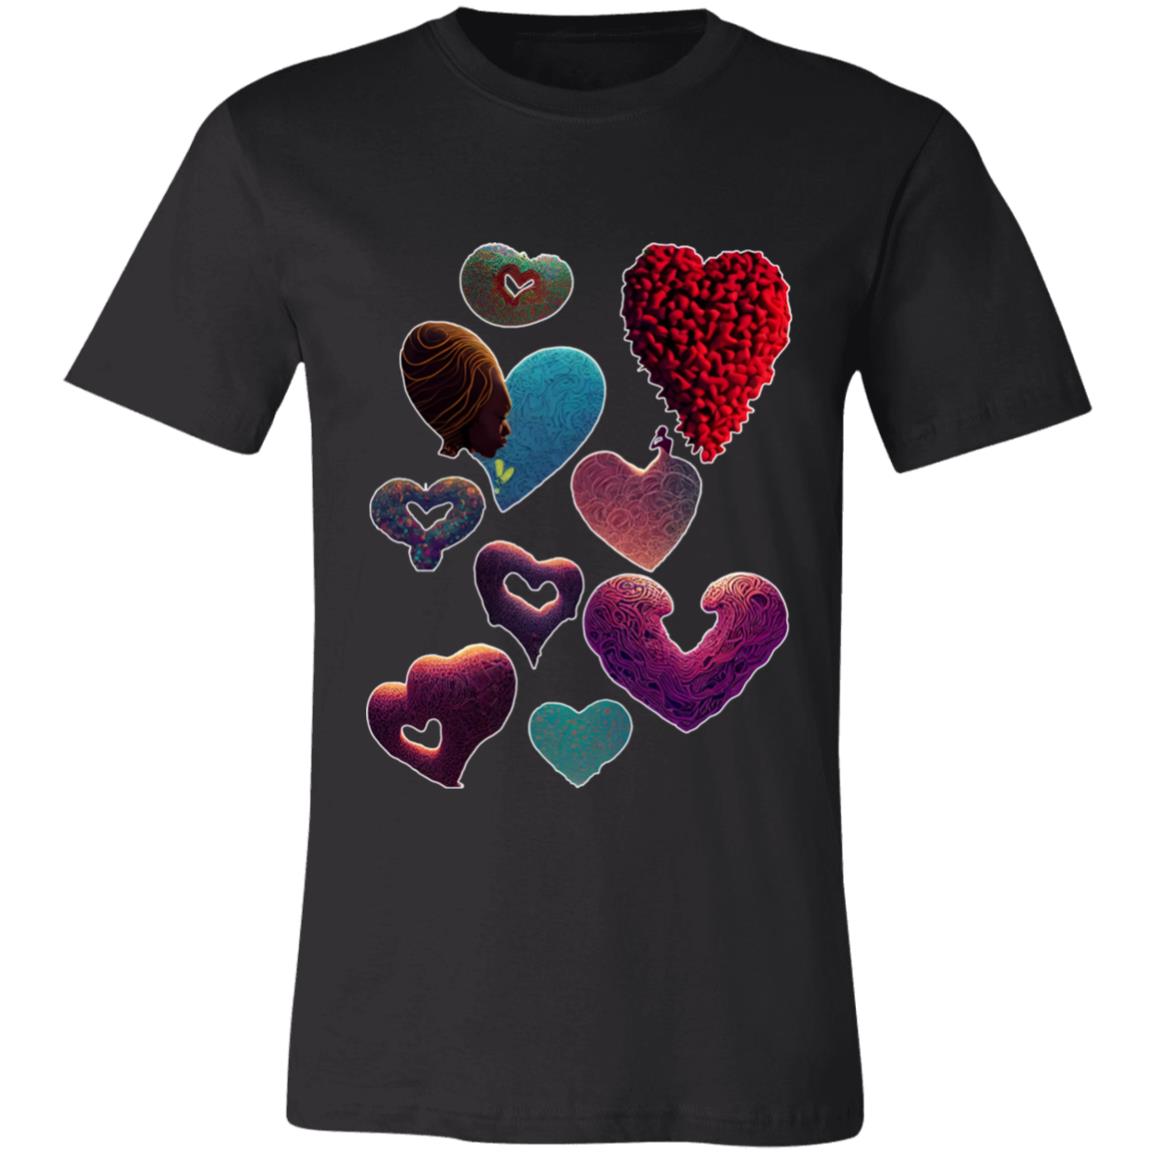 Hearts Galore Short-Sleeve T-Shirt